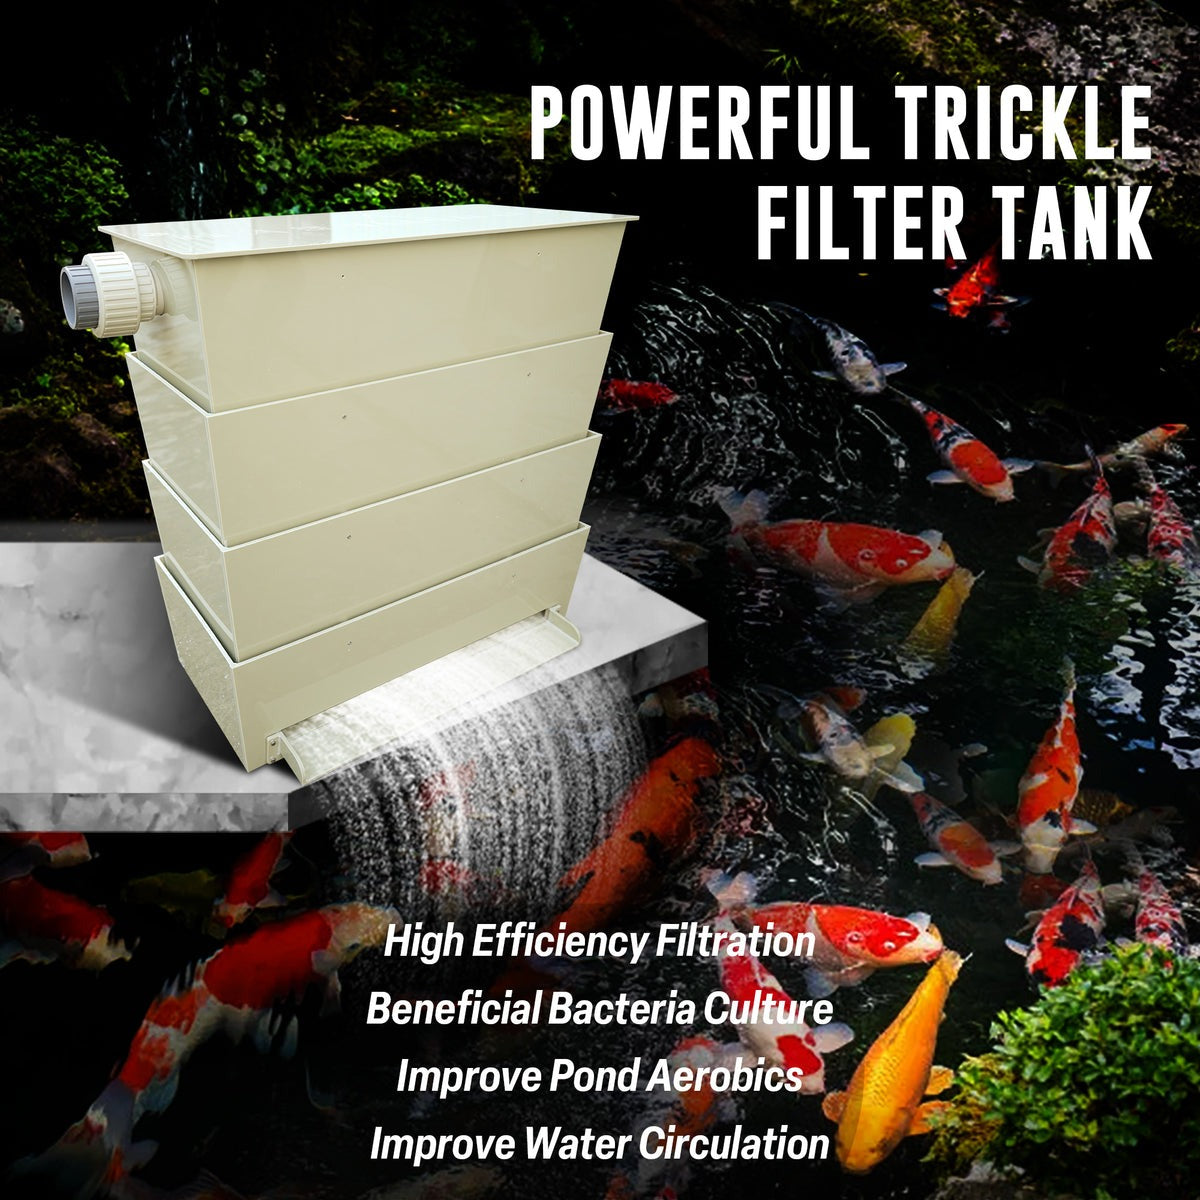 Fish Pond Bakki Shower Trickle Filter Drip Box 38 Tons 10200 GPH - BK-38 - Serenity Provision